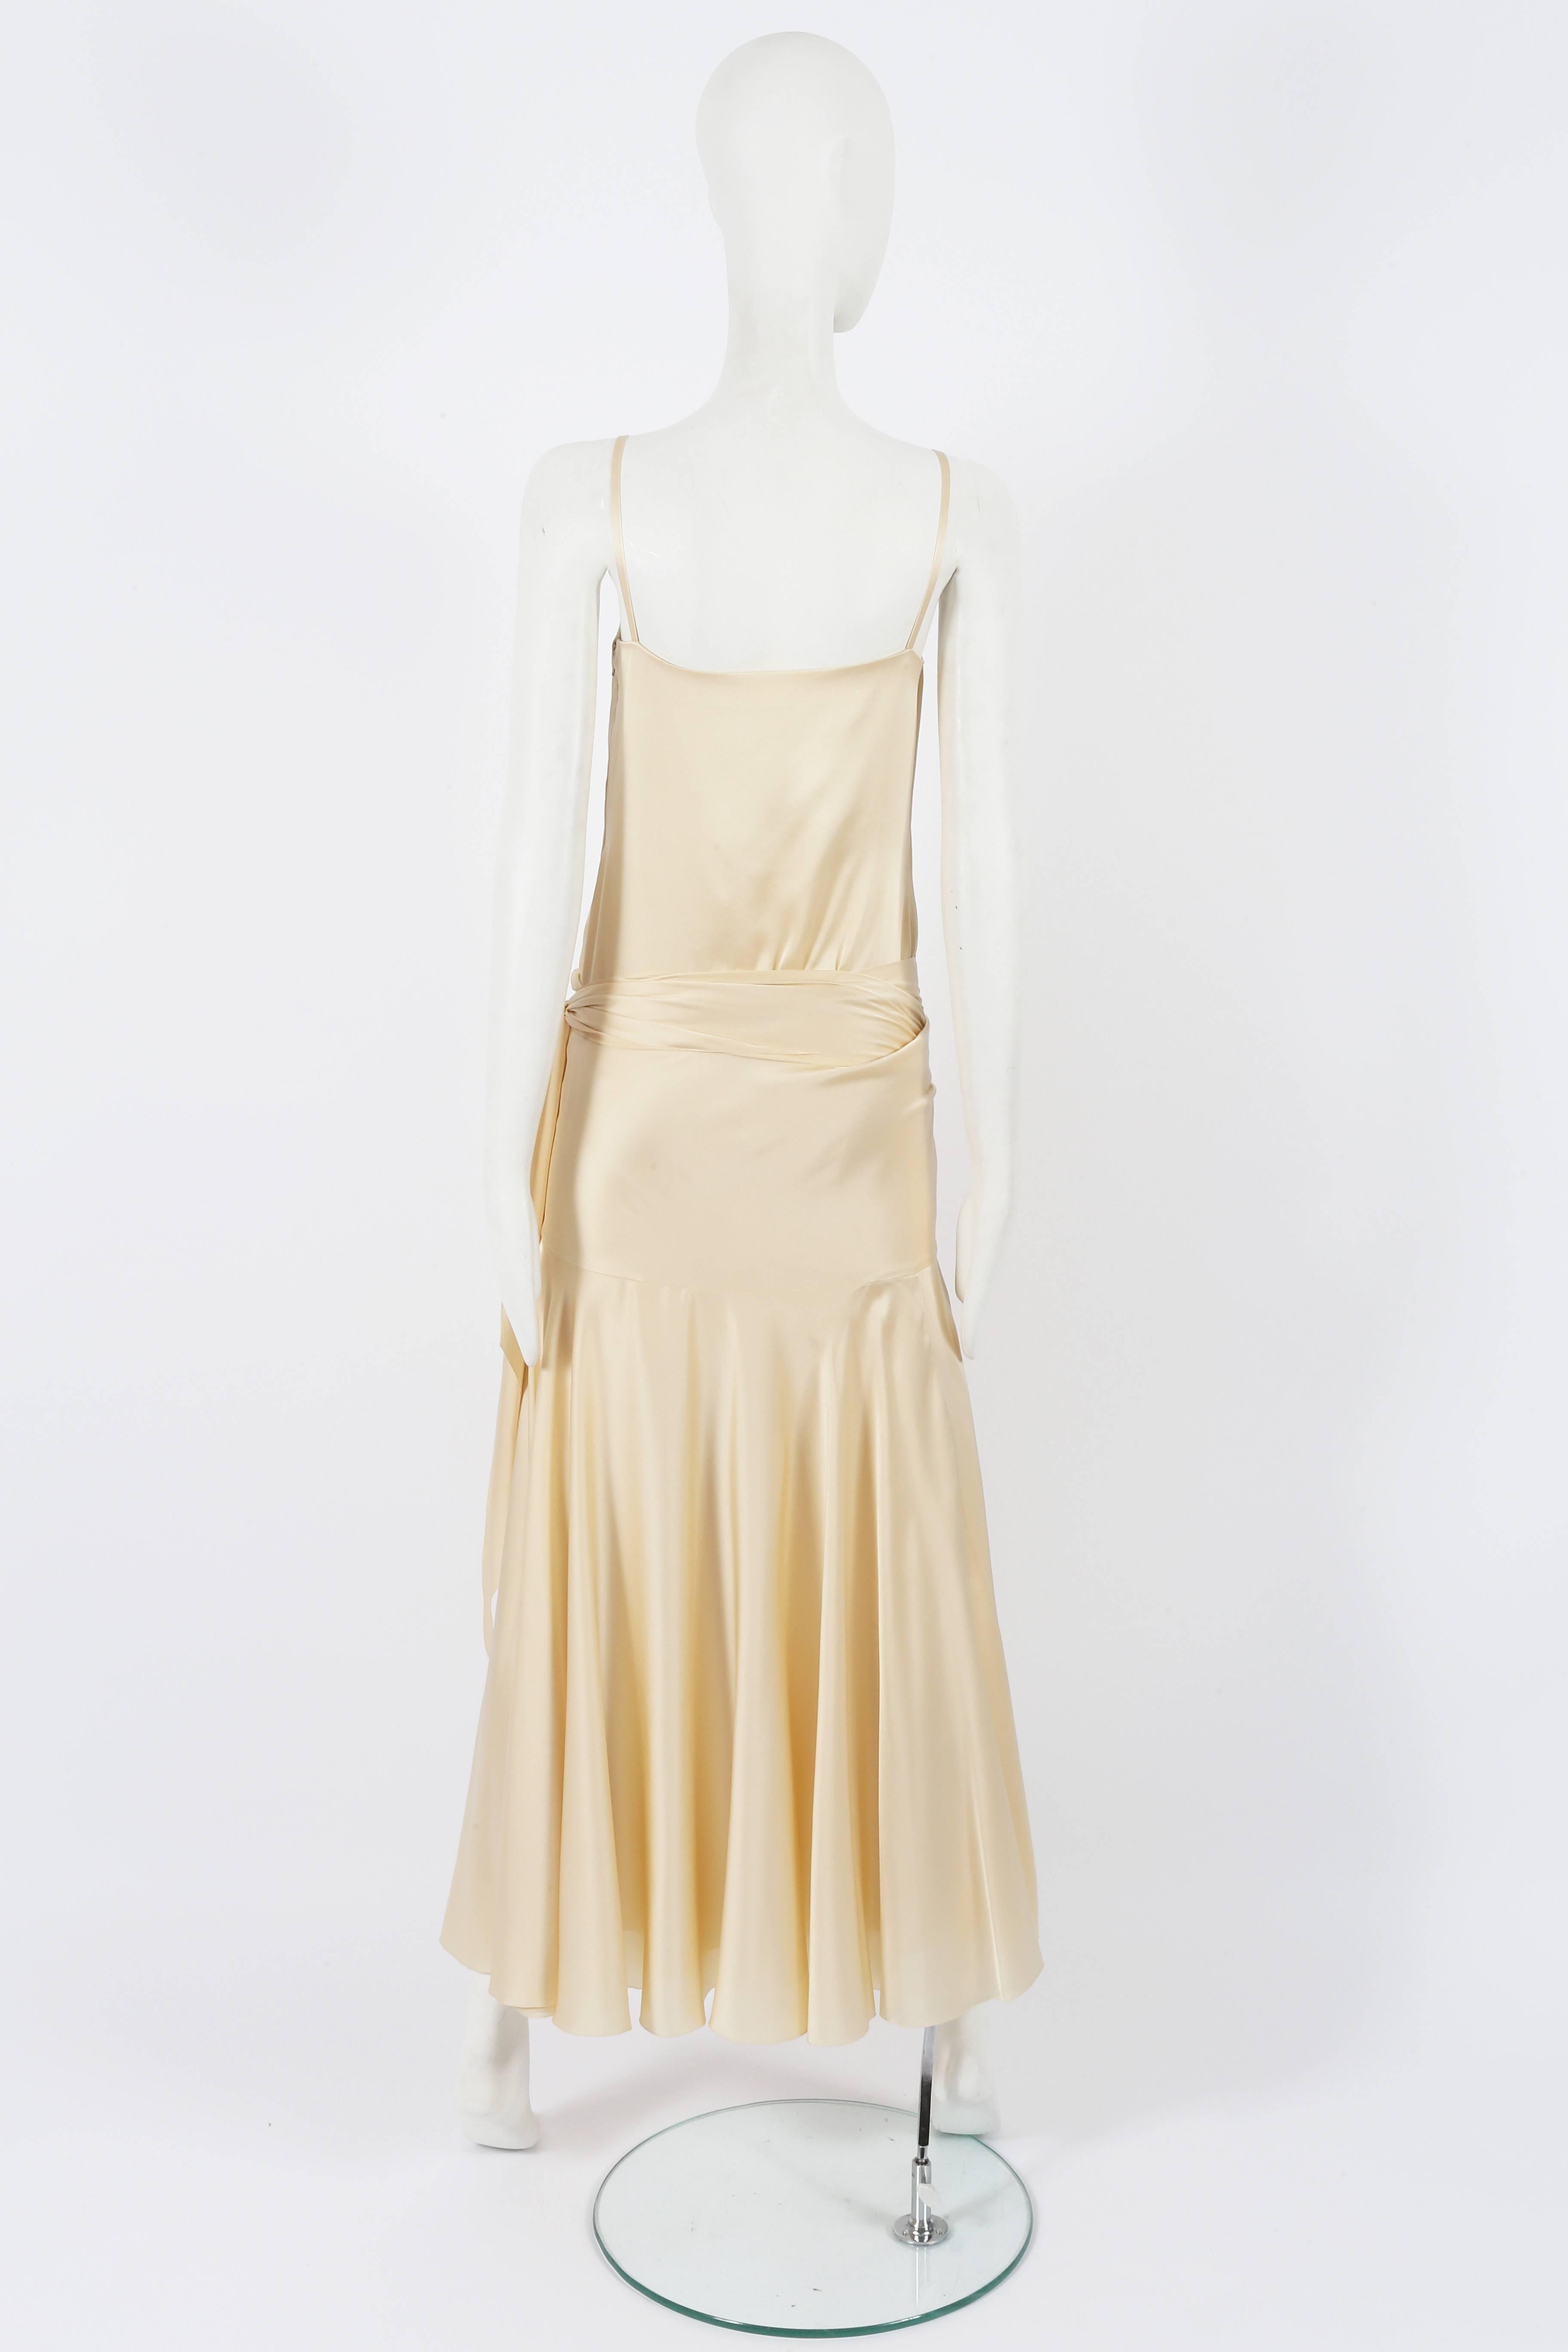 Christian Dior Haute Couture Ivory Silk Evening Dress, circa 1978 1